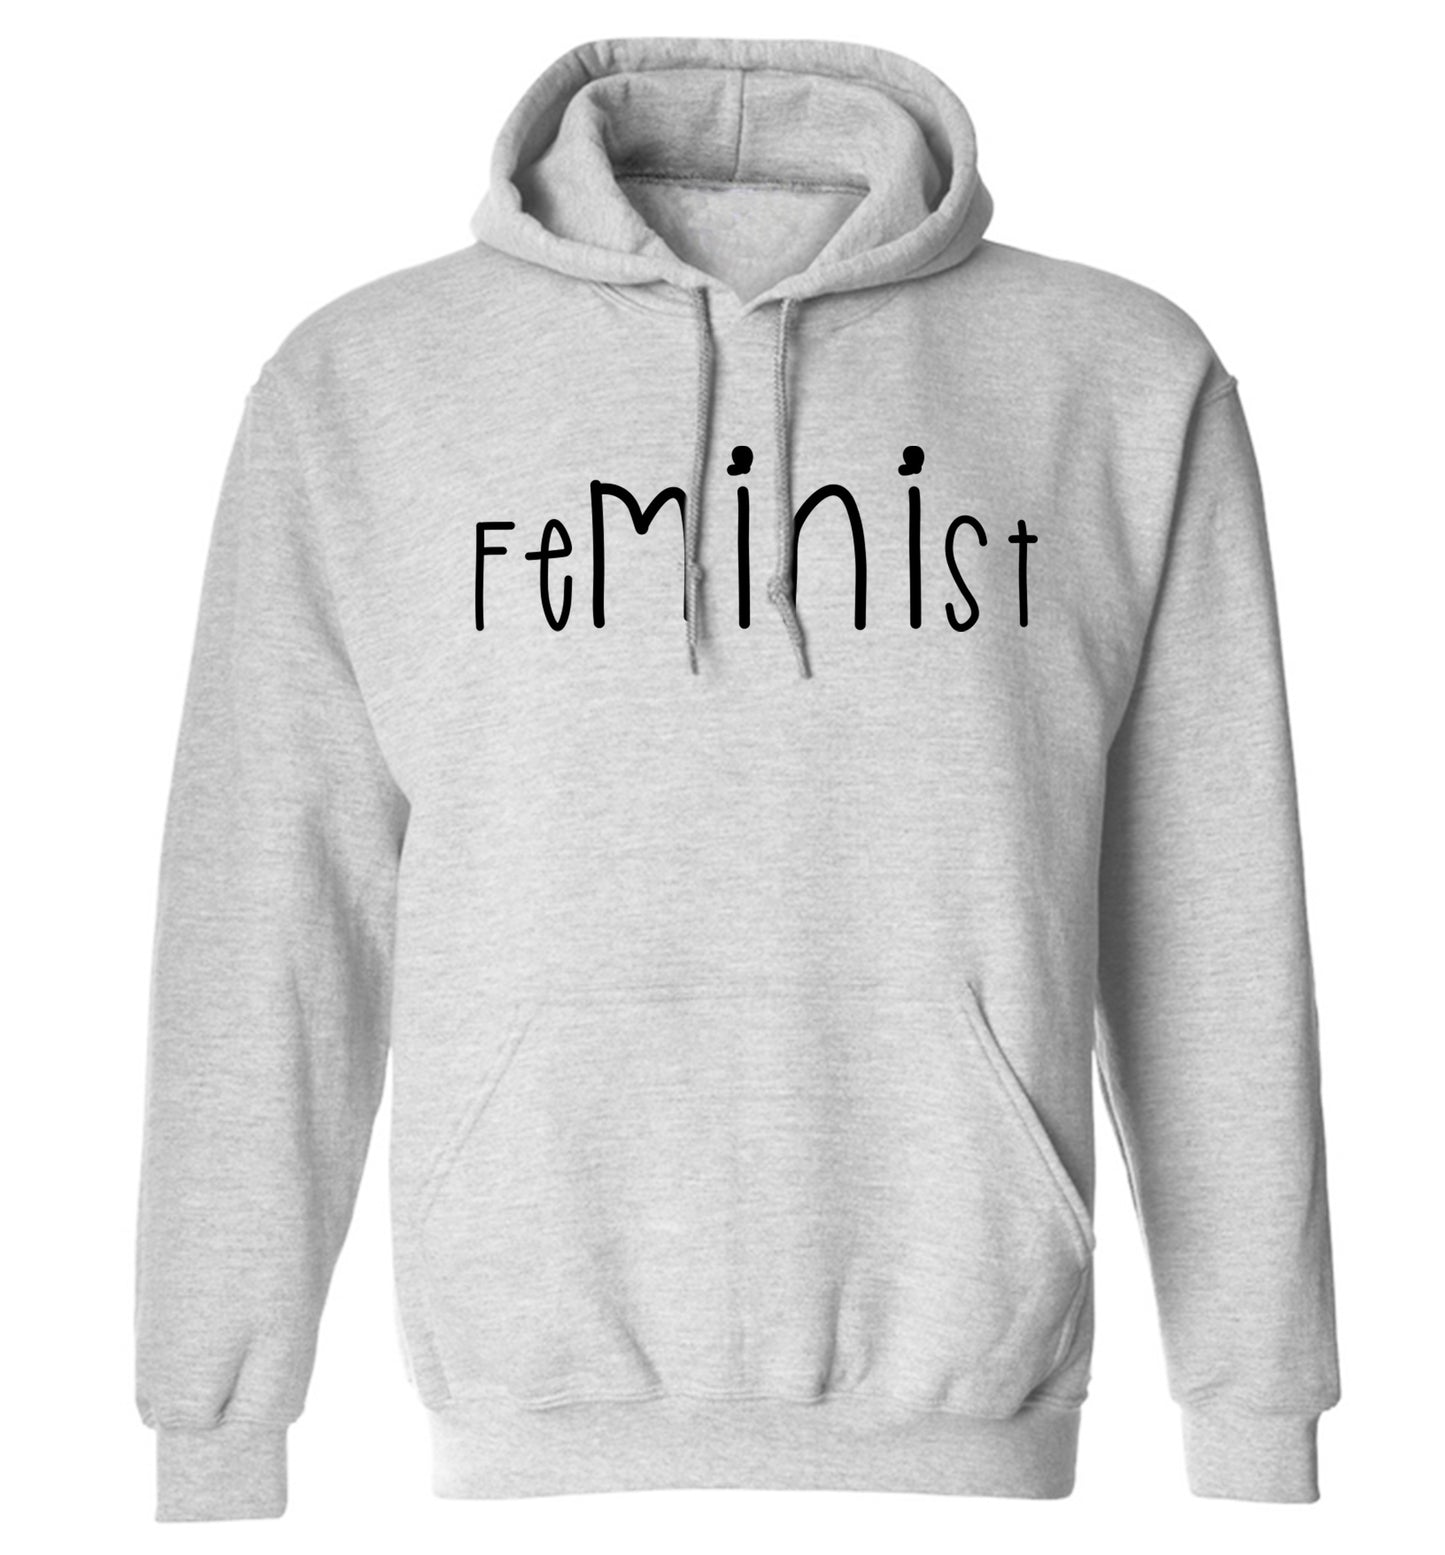 FeMINIst adults unisex grey hoodie 2XL